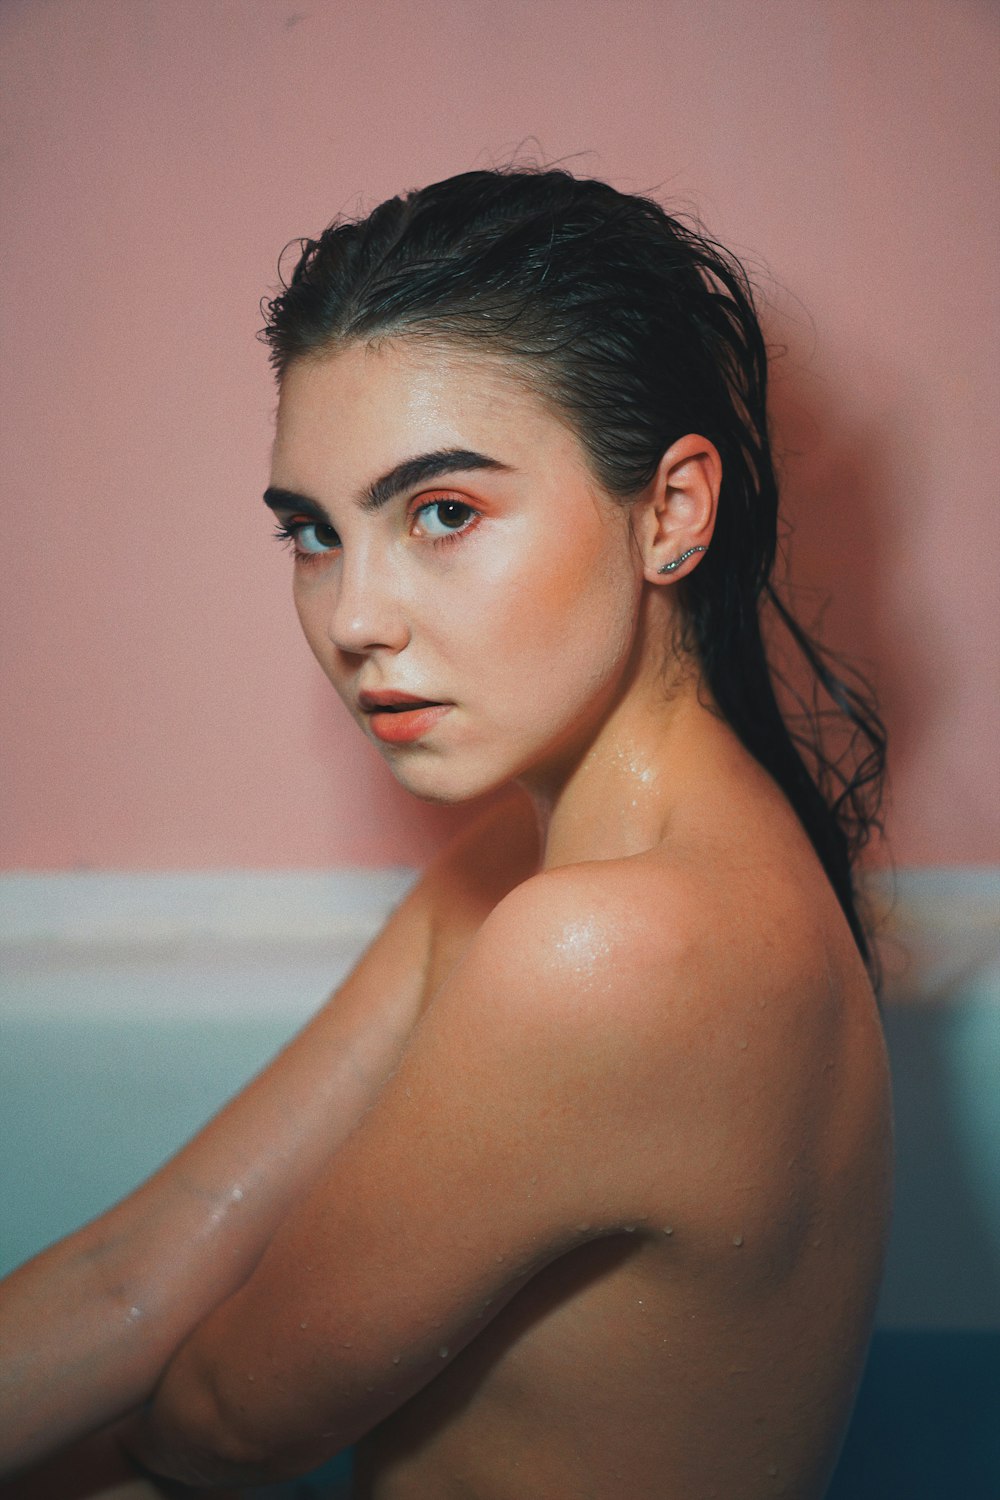 topless woman on bath tub